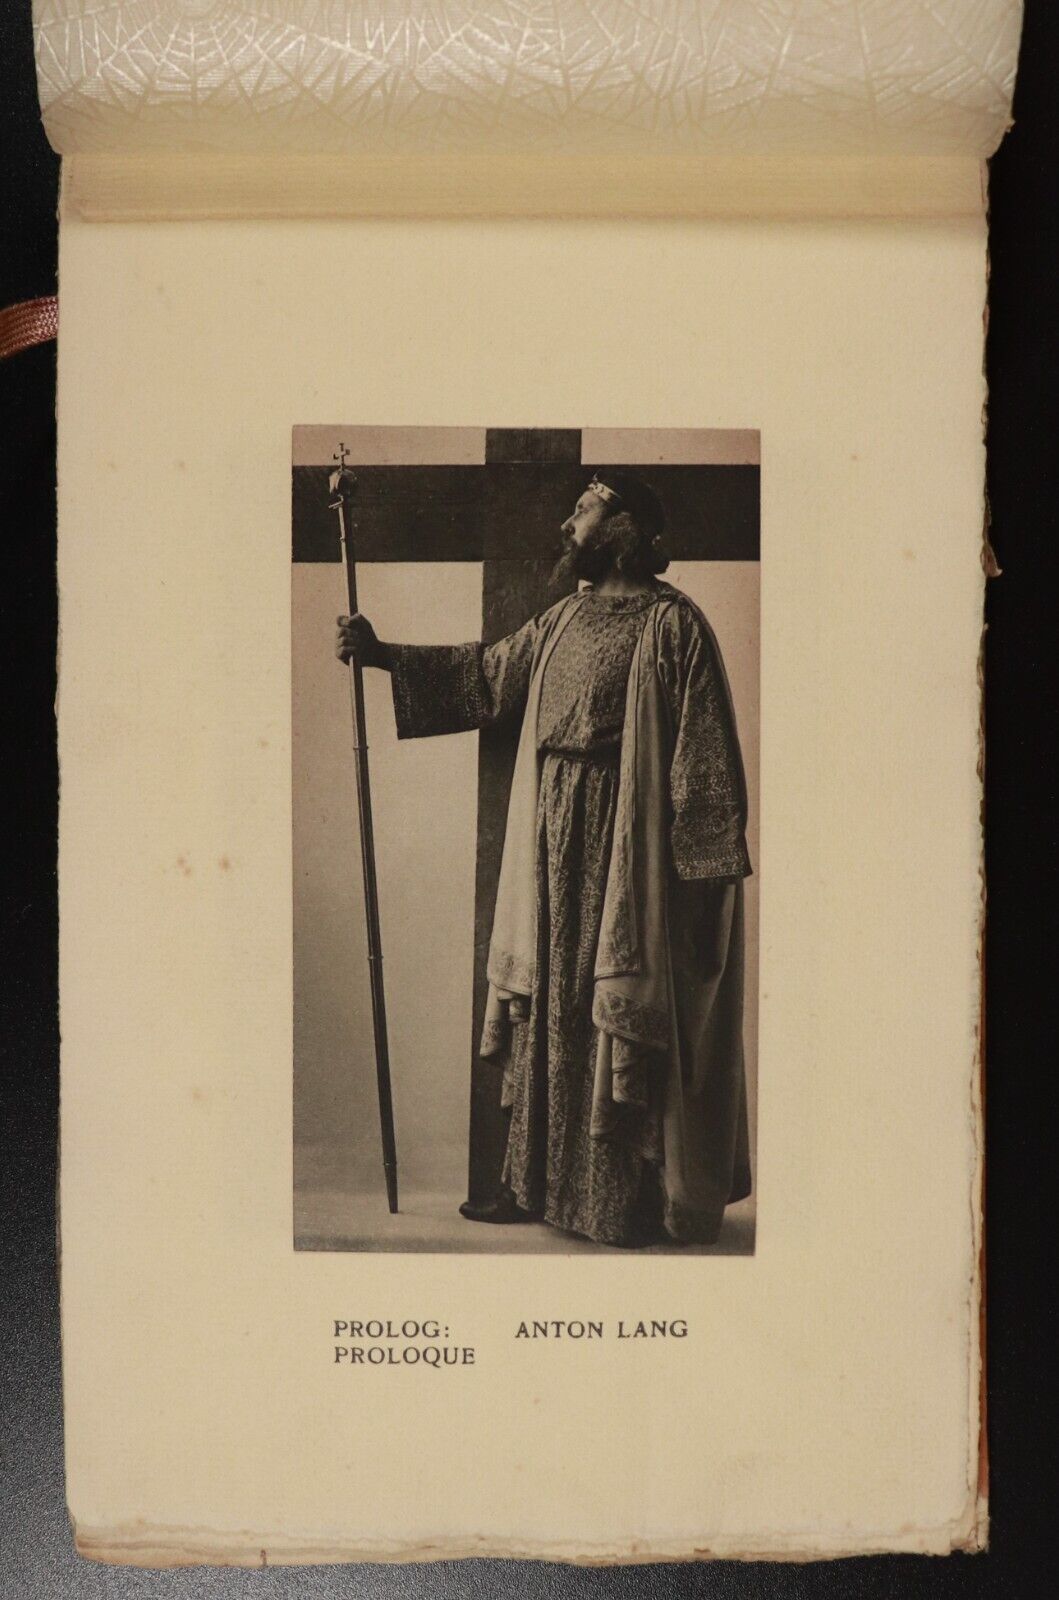 1930 Album Of Scenes From The Oberammergau Passion Play Antique Theatre Book